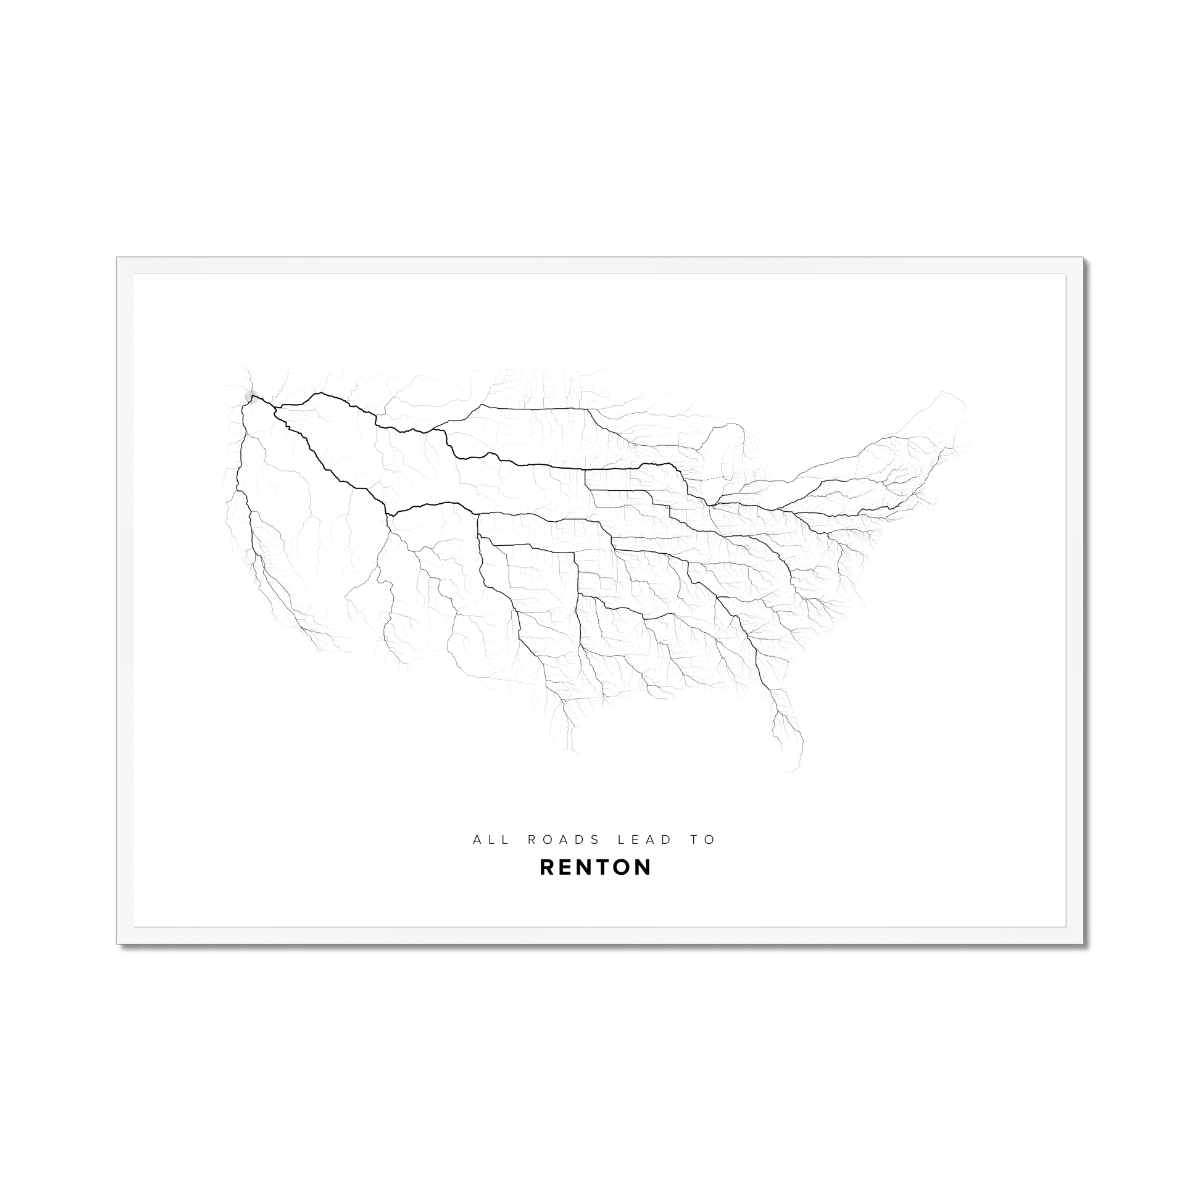 All roads lead to Renton (United States of America) Fine Art Map Print